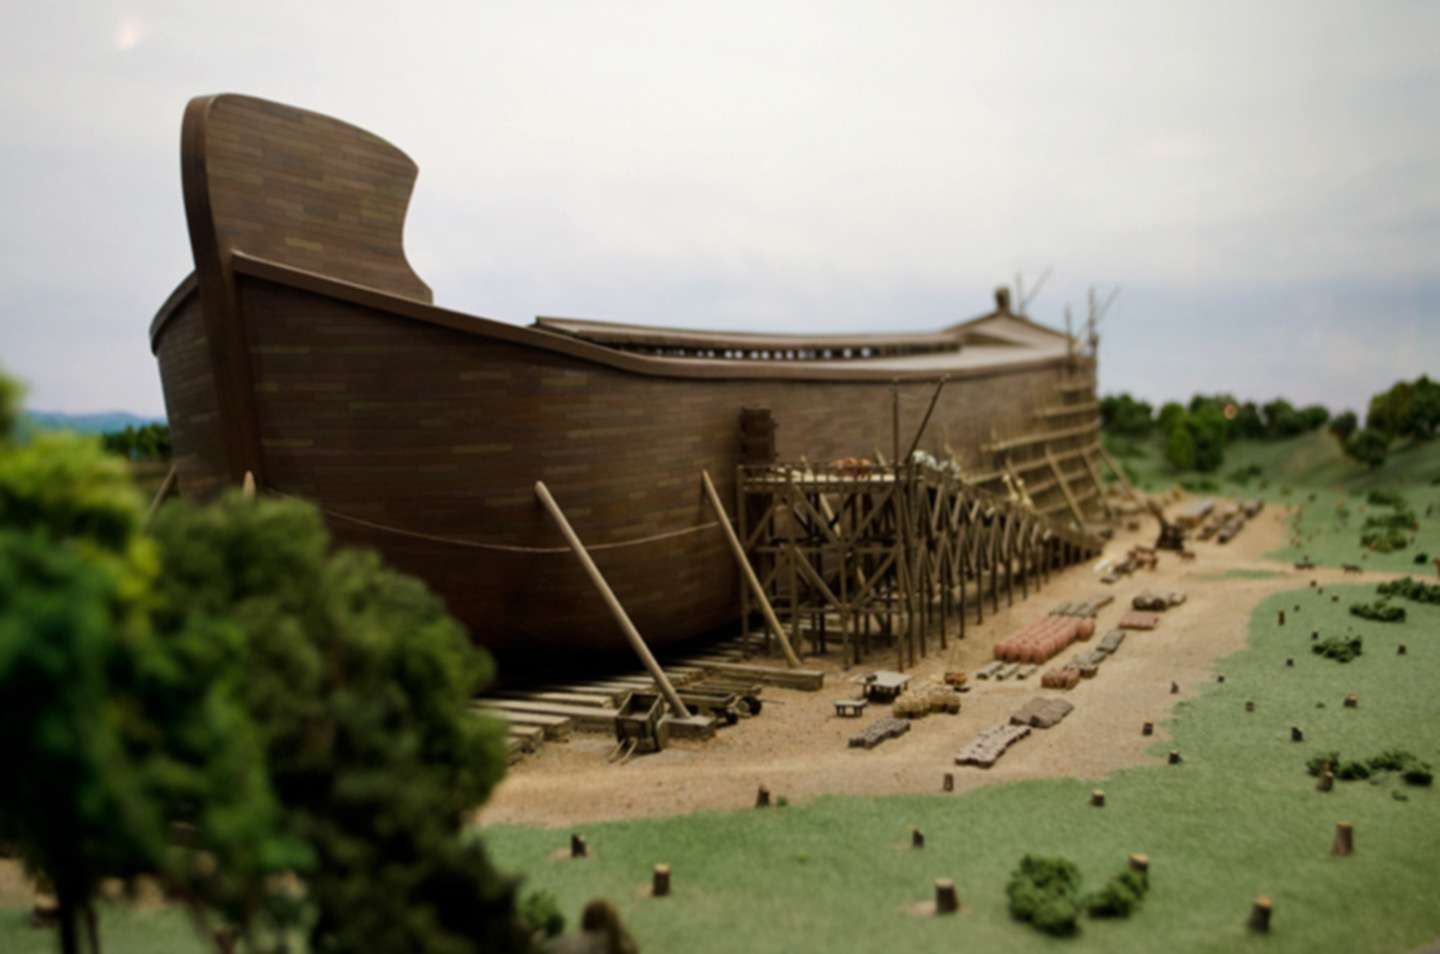 The Ark Encounter